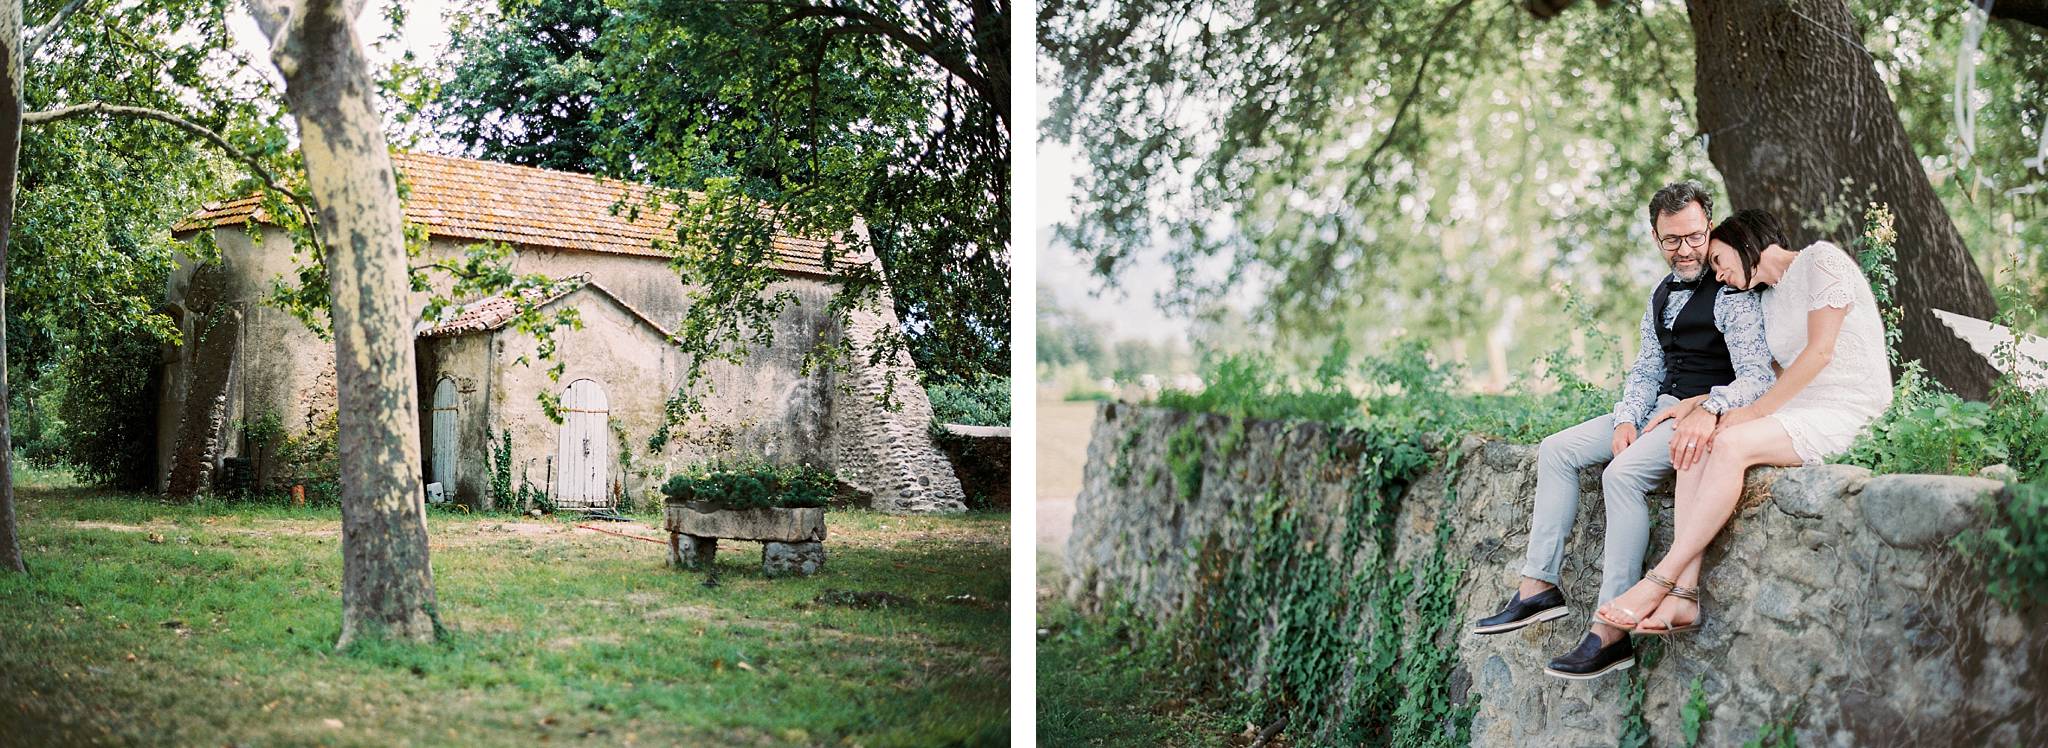 Mariage au château de Villeclare - Hugo Hennequin Photographe Perpignan Sud de France - Laeti + David-0094.jpg